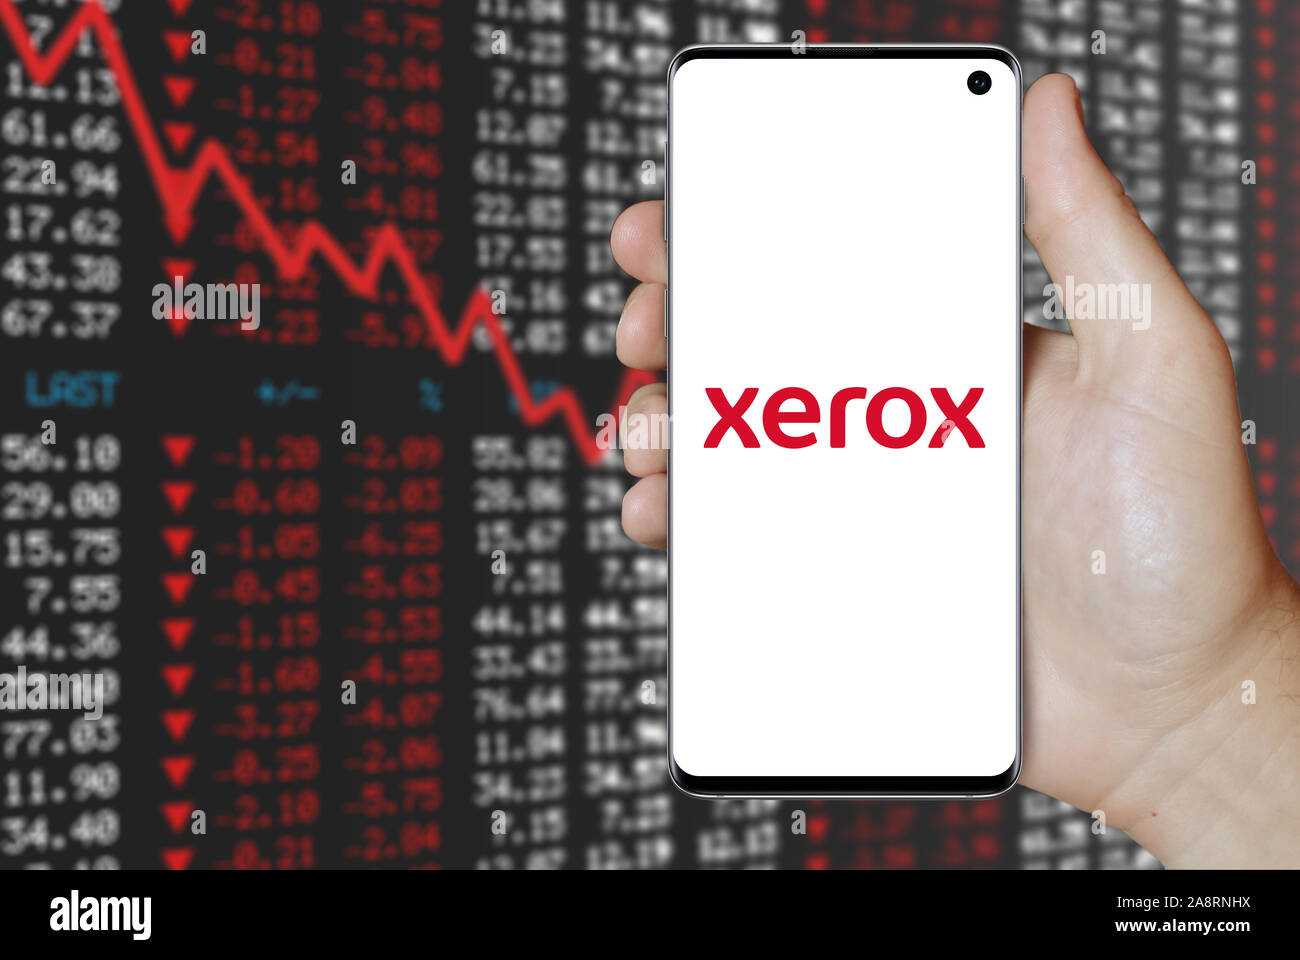 Logo of public company Xerox displayed on a smartphone. Negative stock market background. Credit: PIXDUCE Stock Photo